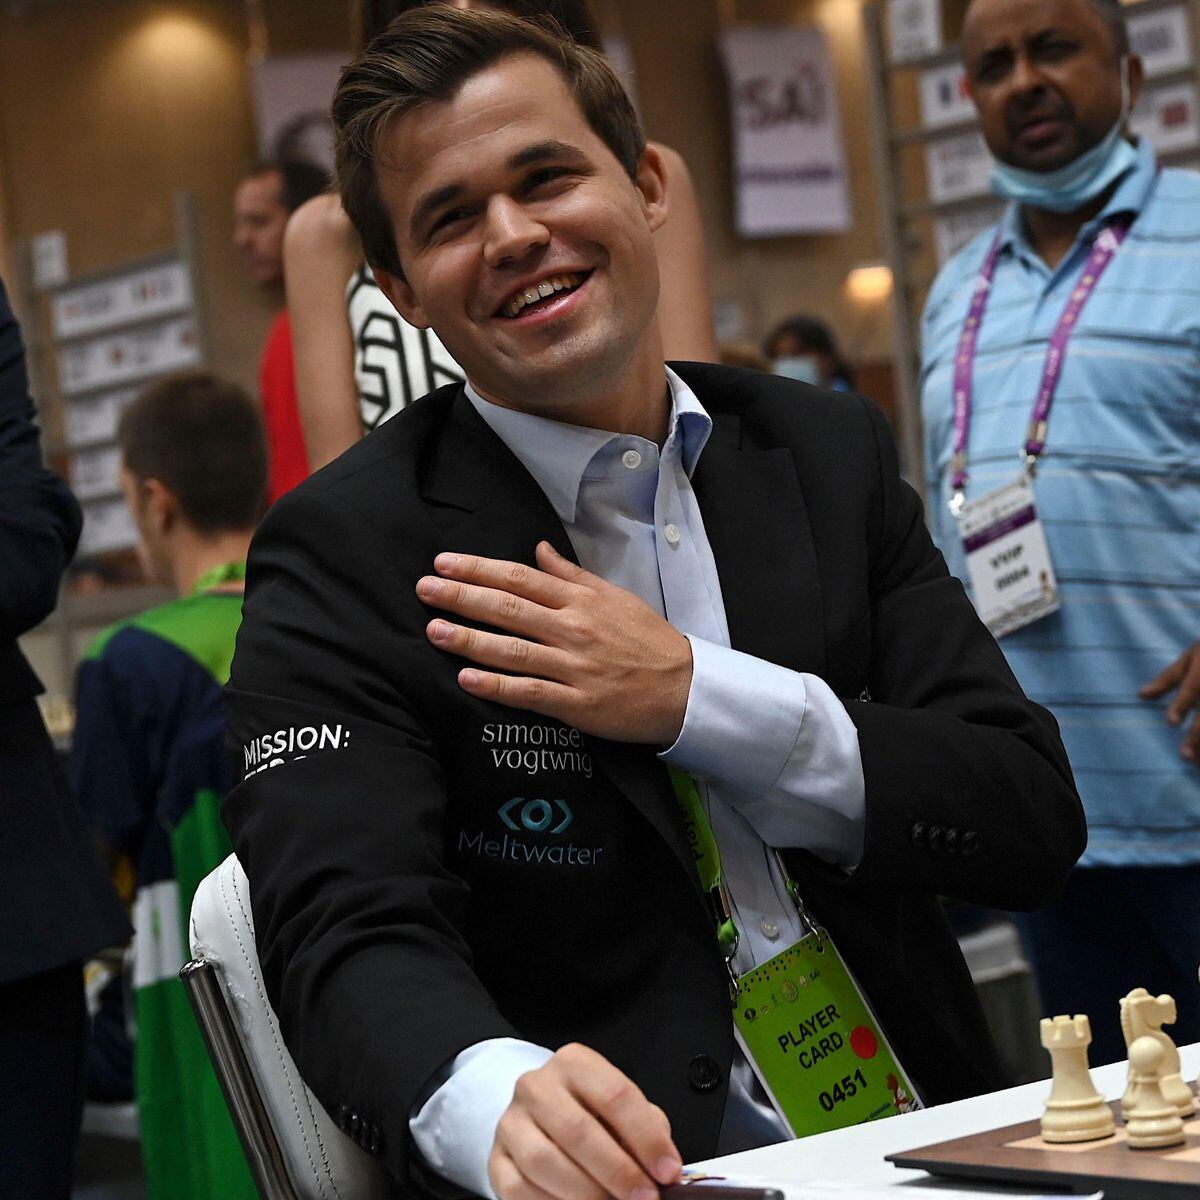 O FIM da ERA Carlsen: a ÚLTIMA PARTIDA de Magnus Carlsen como